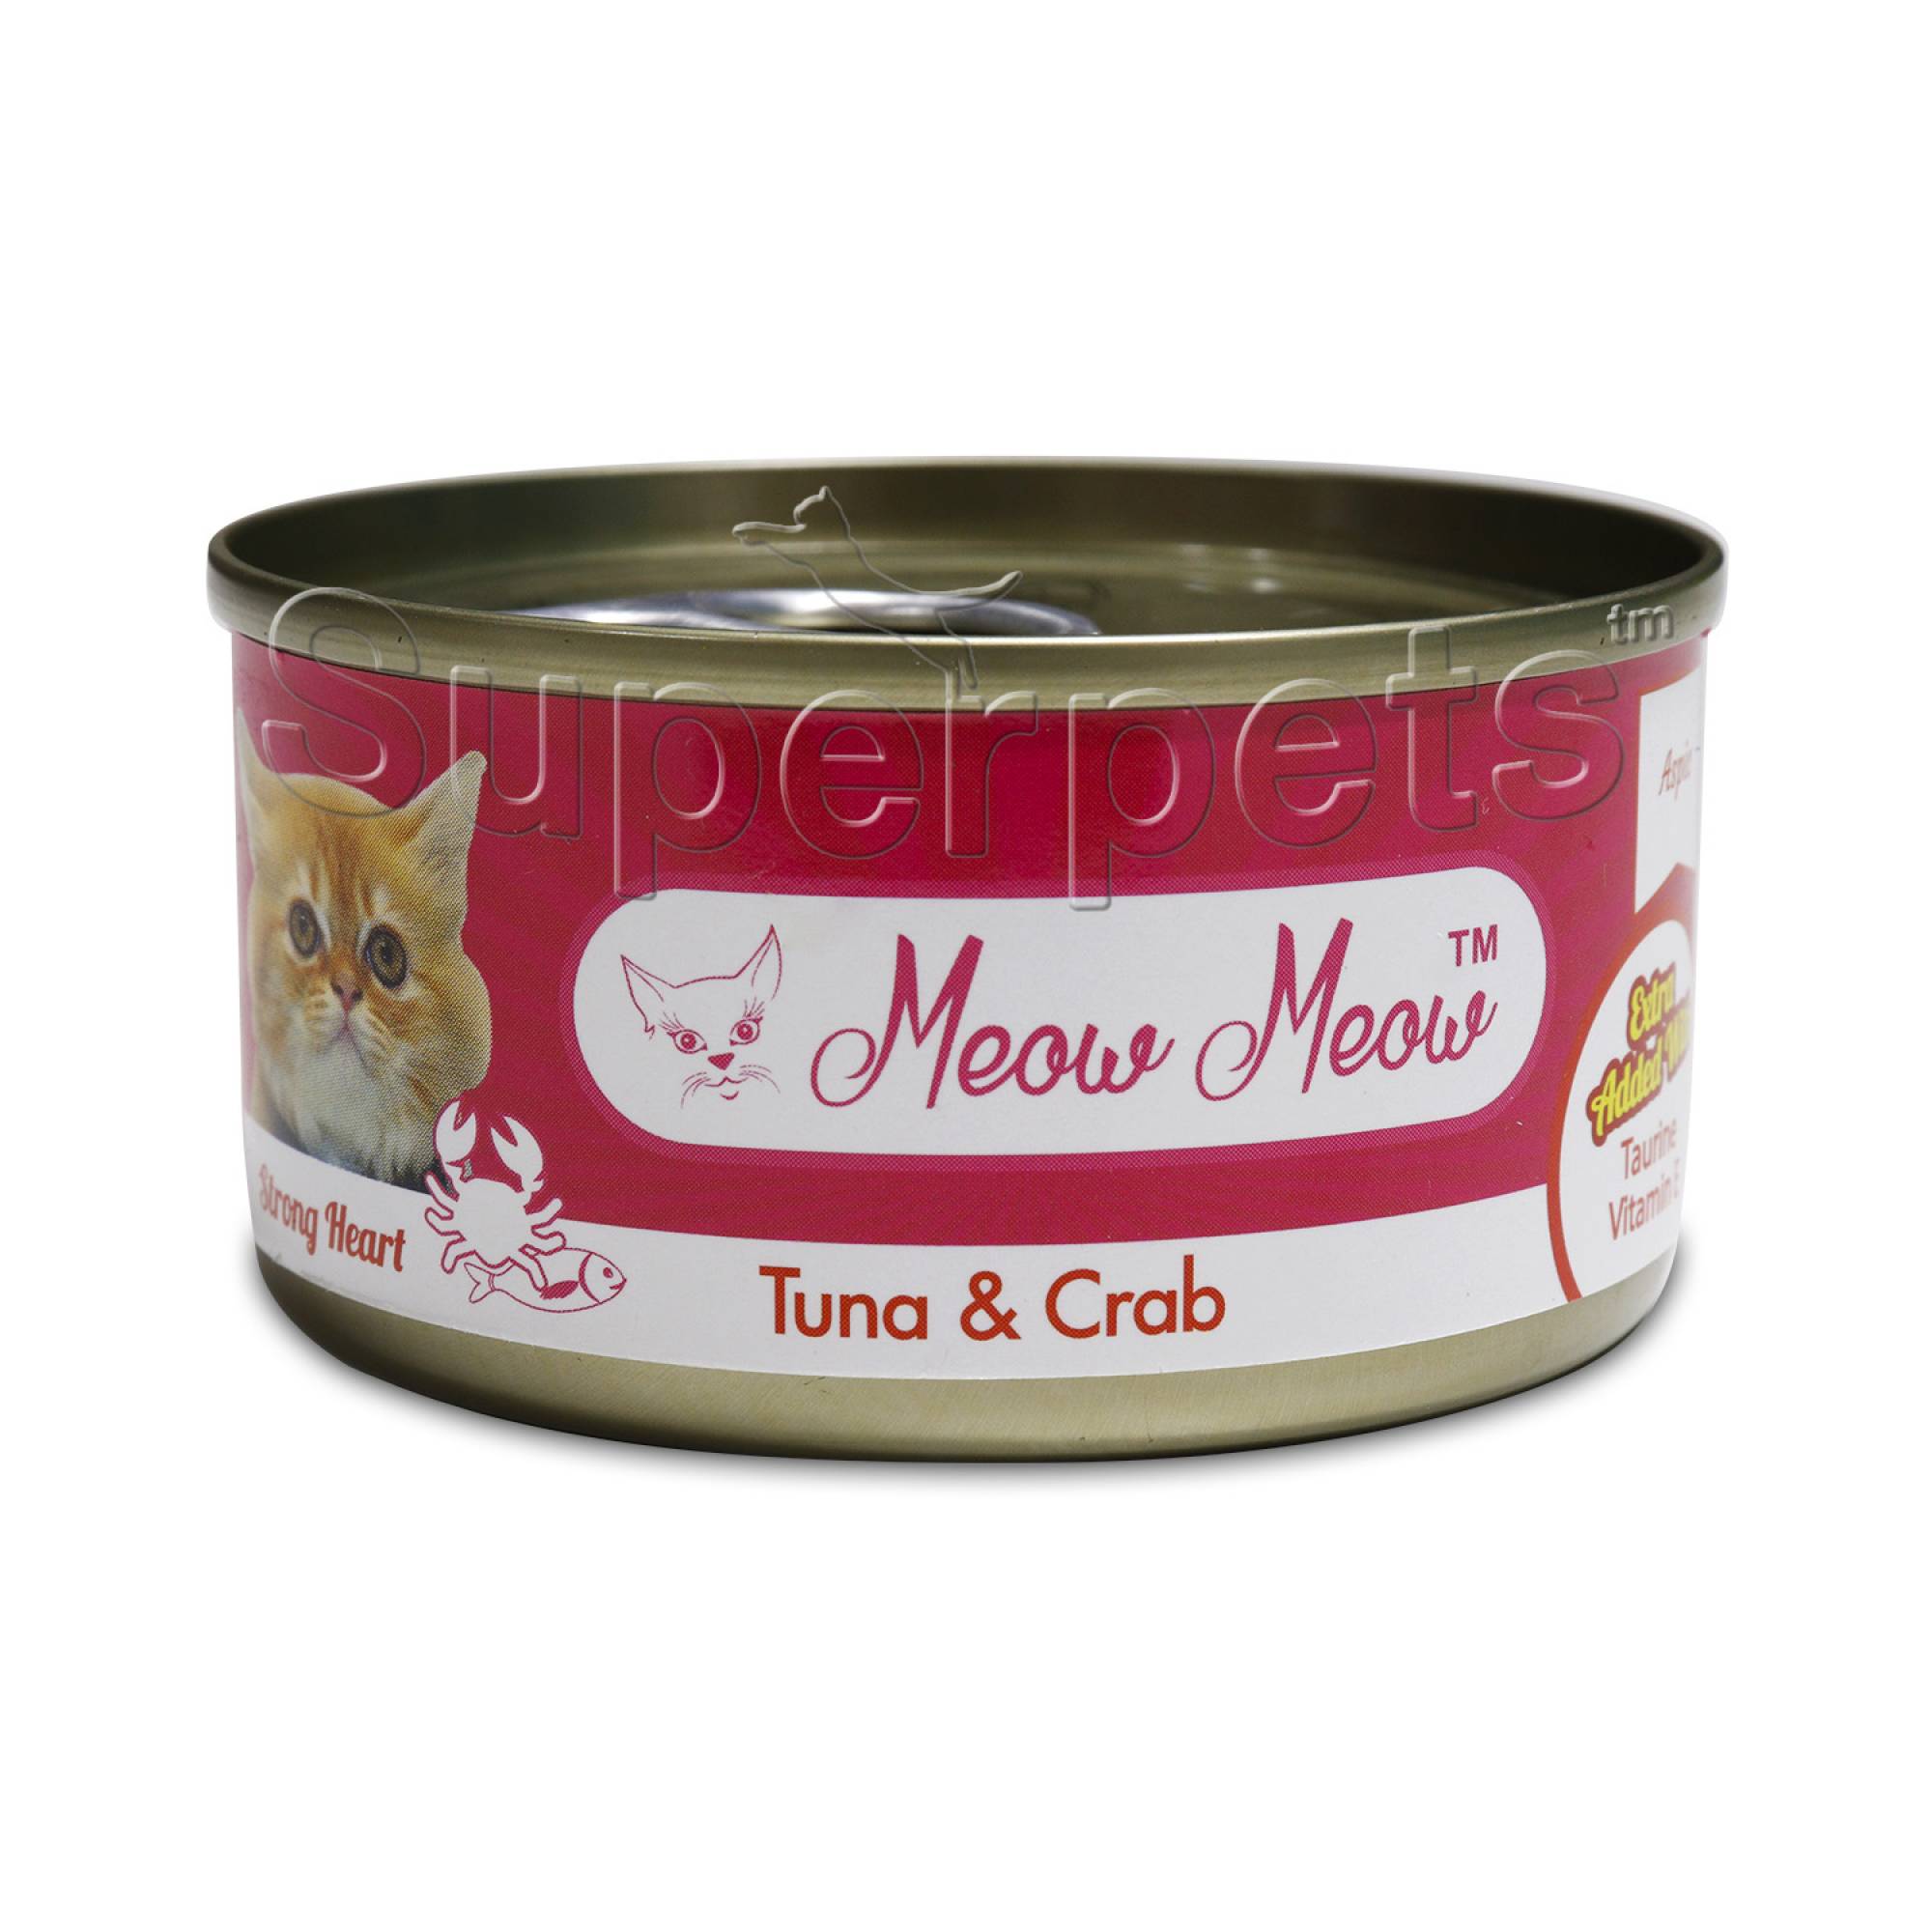 Meow Meow - Tuna & Crab - Grain Free 80g x 24pcs (1 carton)